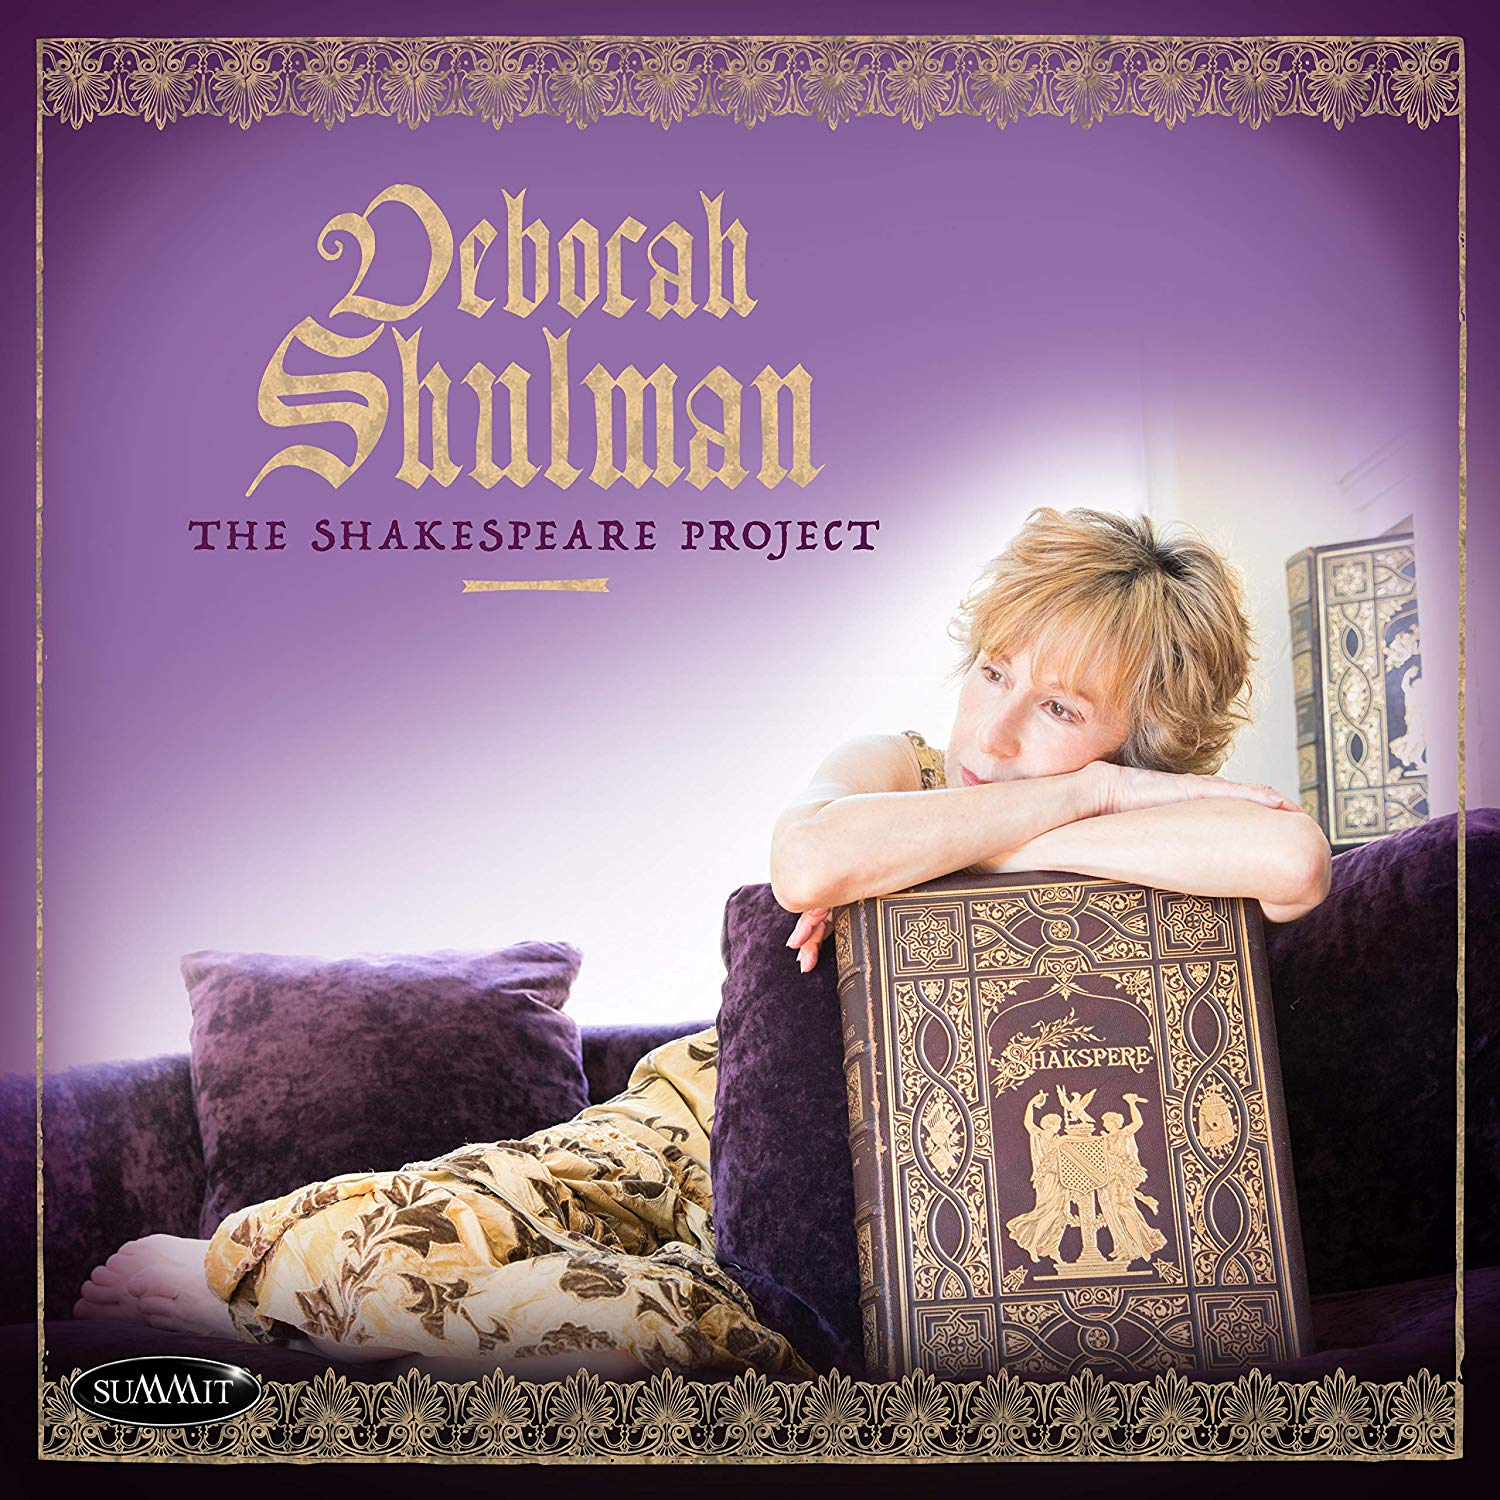 DEBORAH SHULMAN - The Shakespeare Project cover 